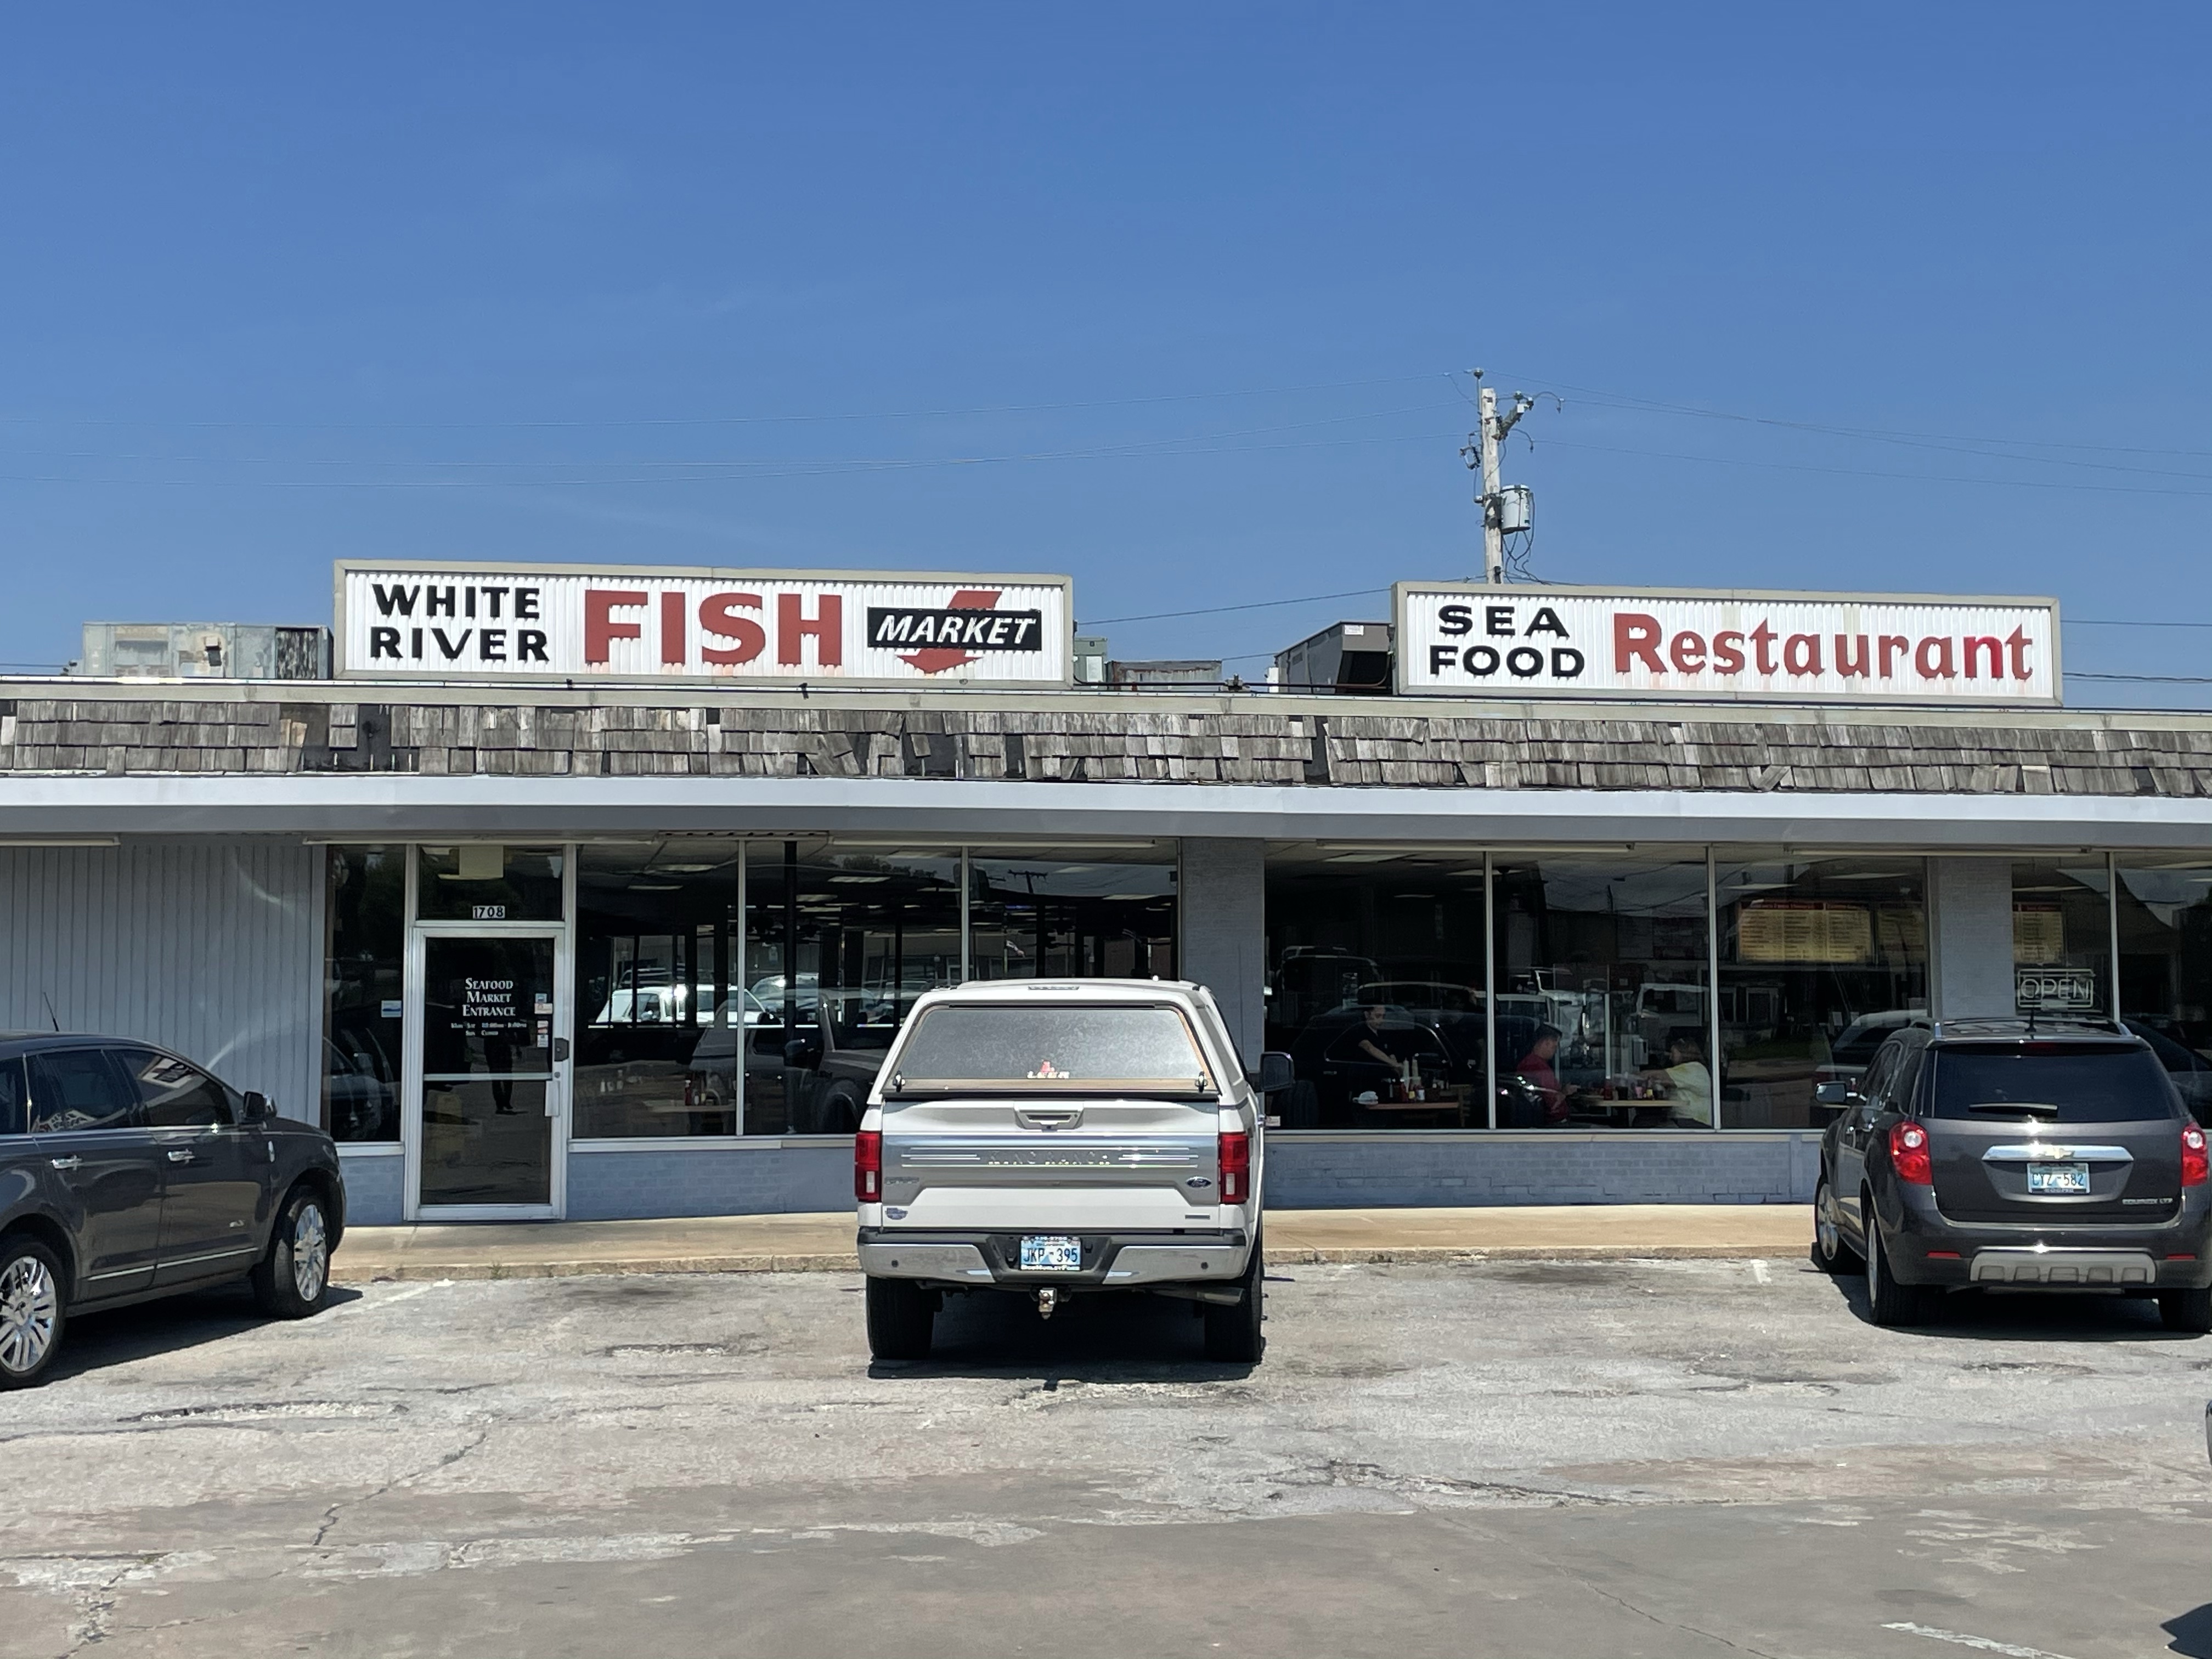 White River Fish Market & Seafood Restaurant